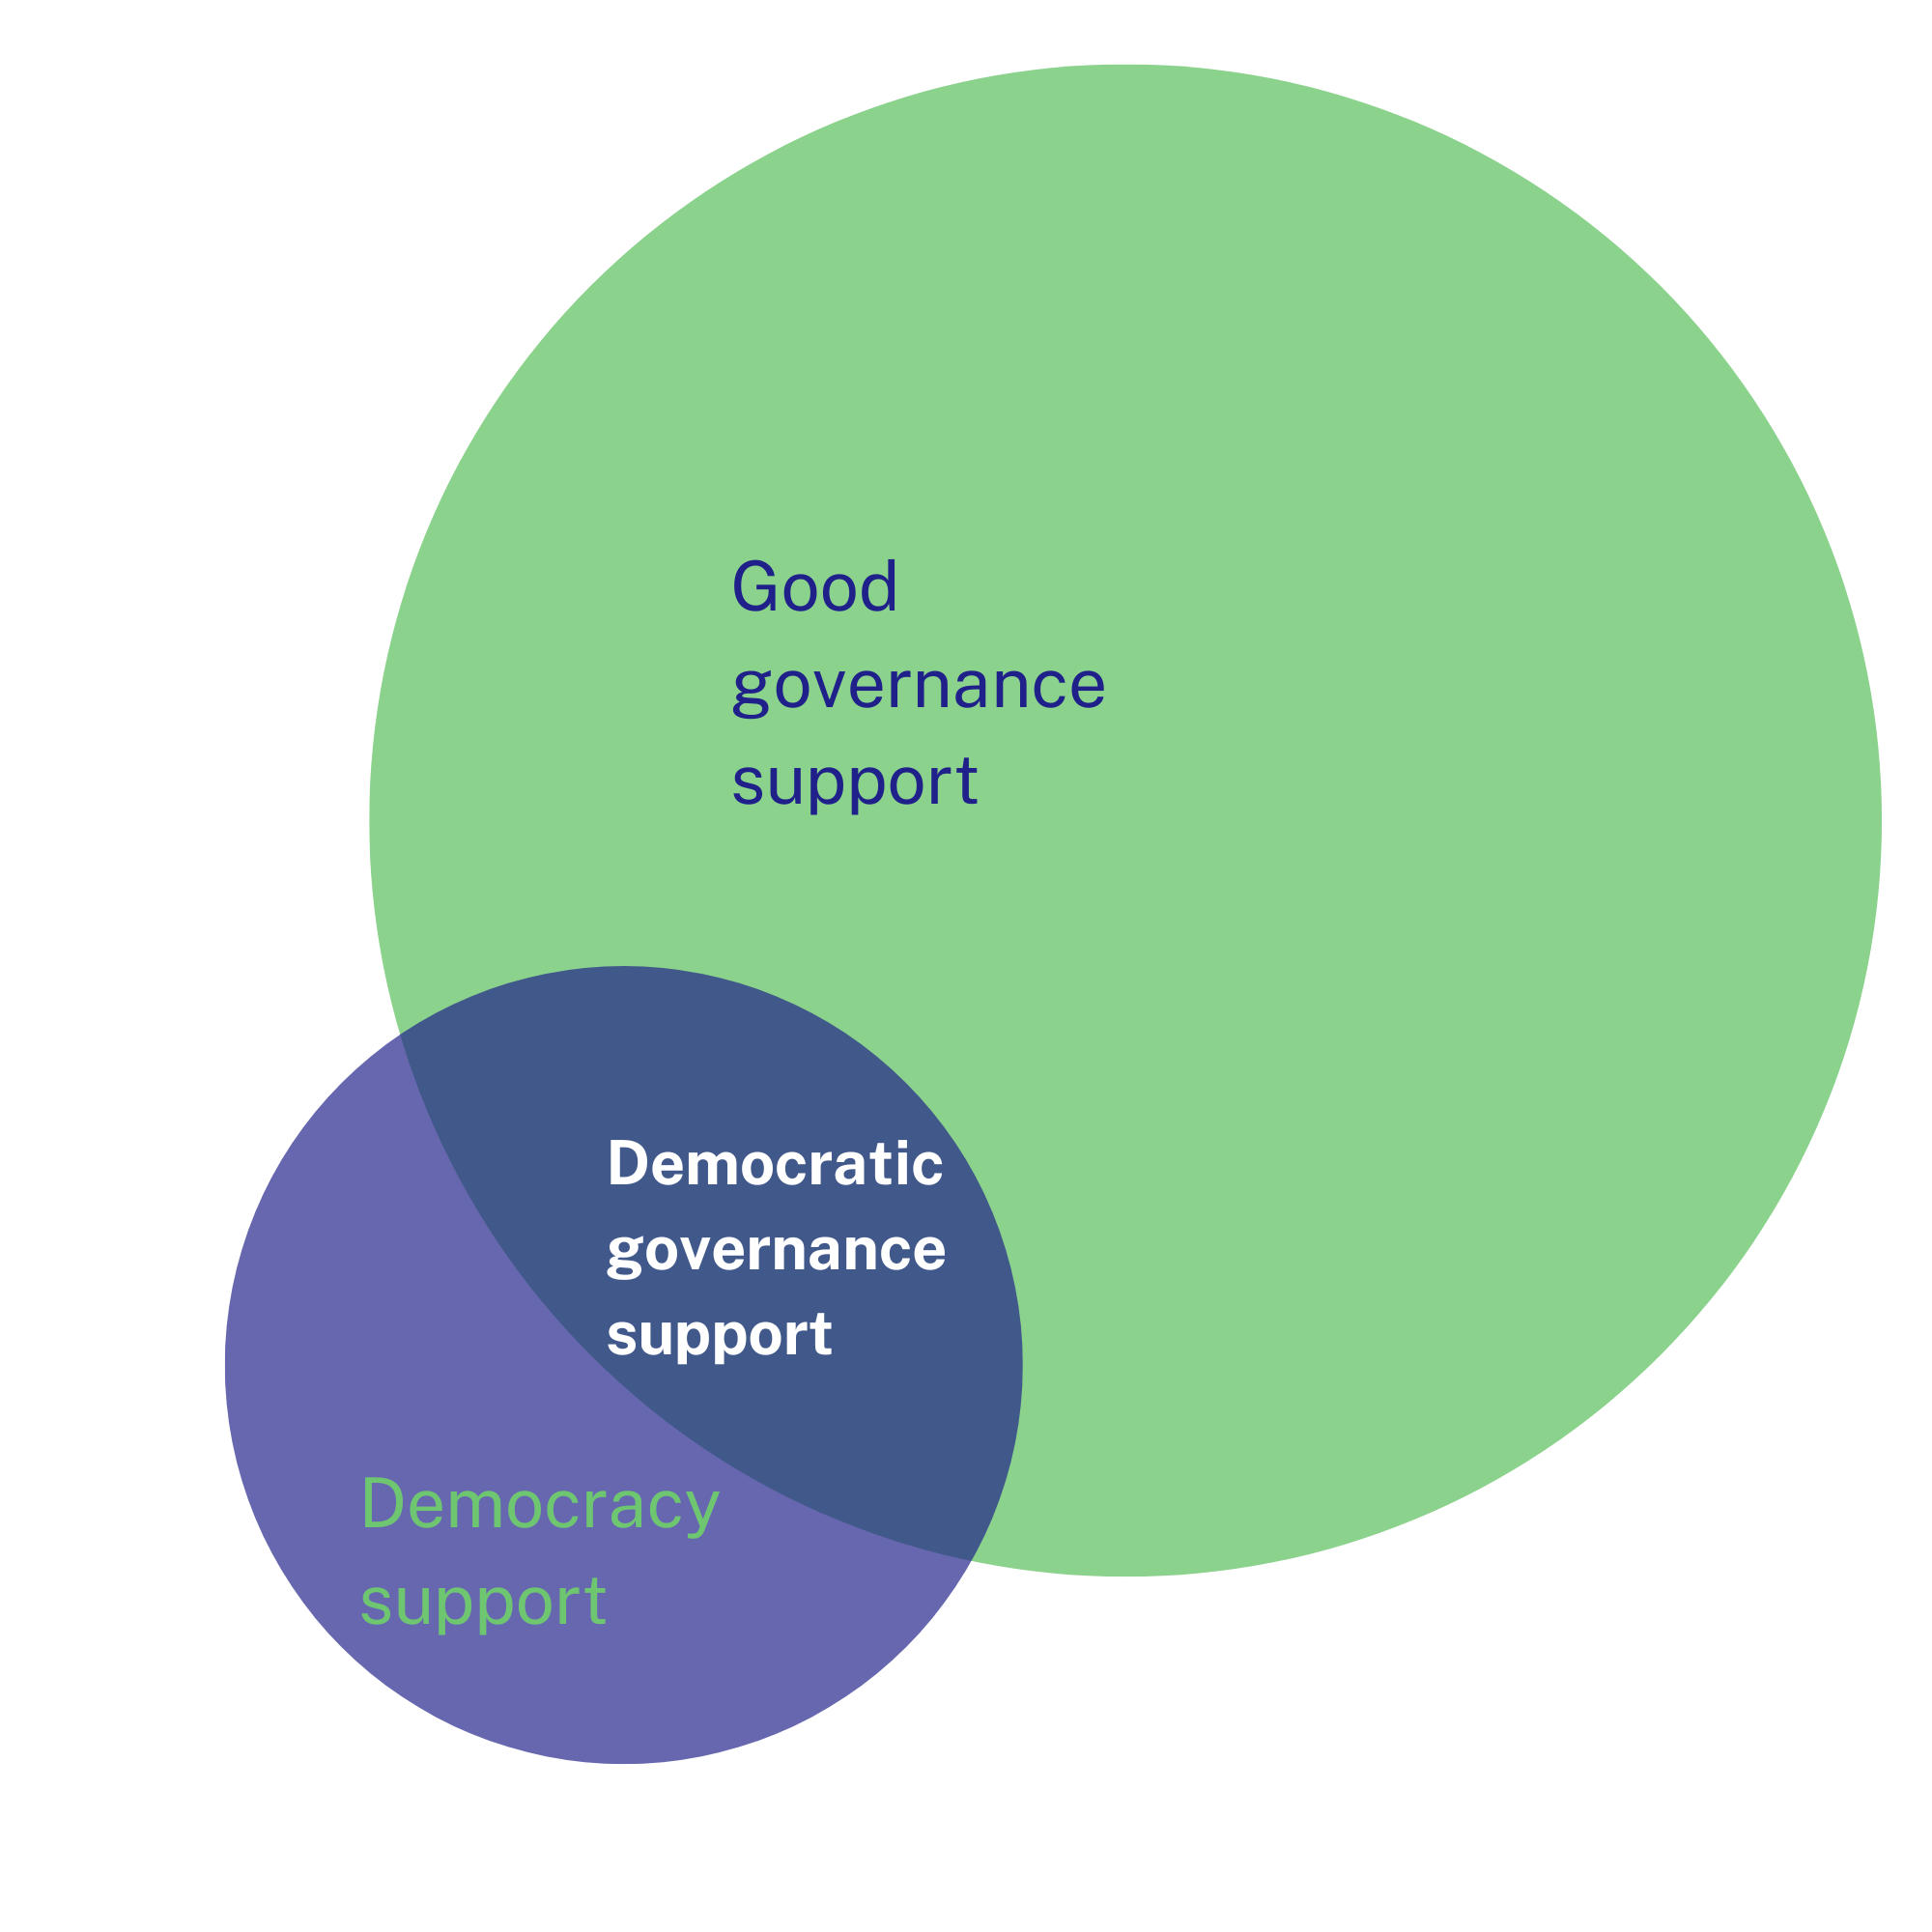 Democratic governance support